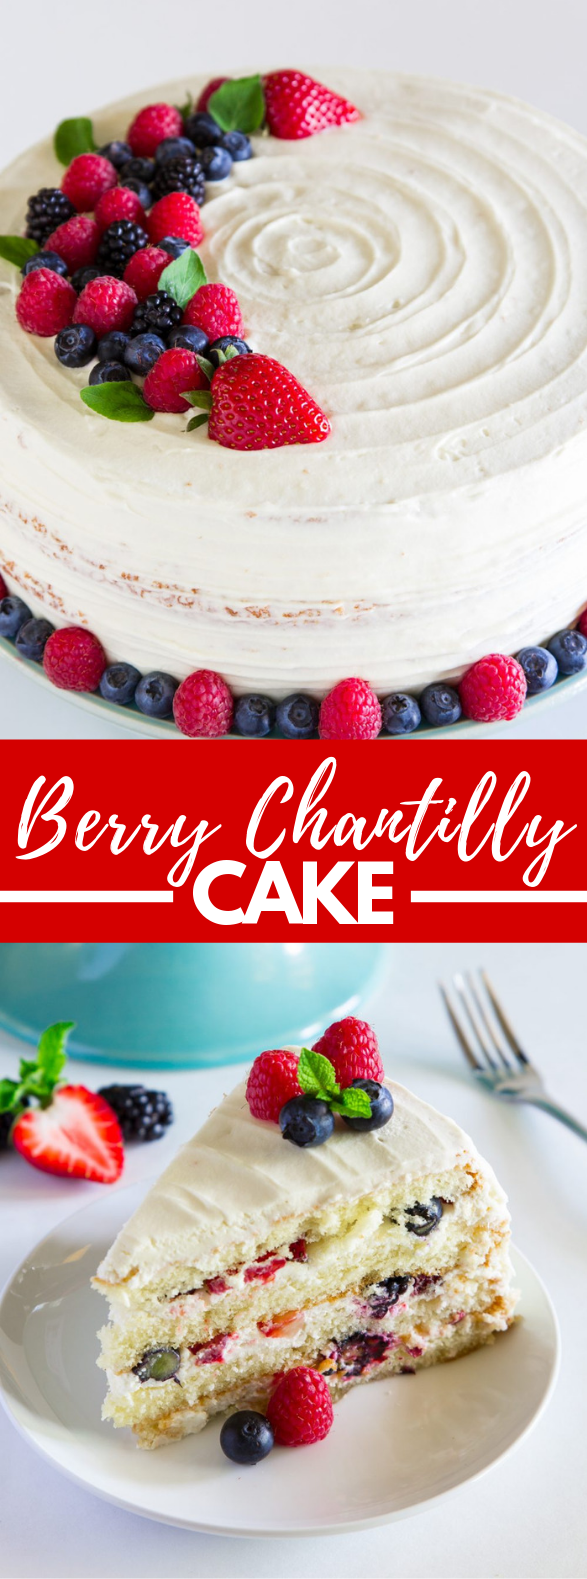 Berry Chantilly Cake #desserts #whitecake